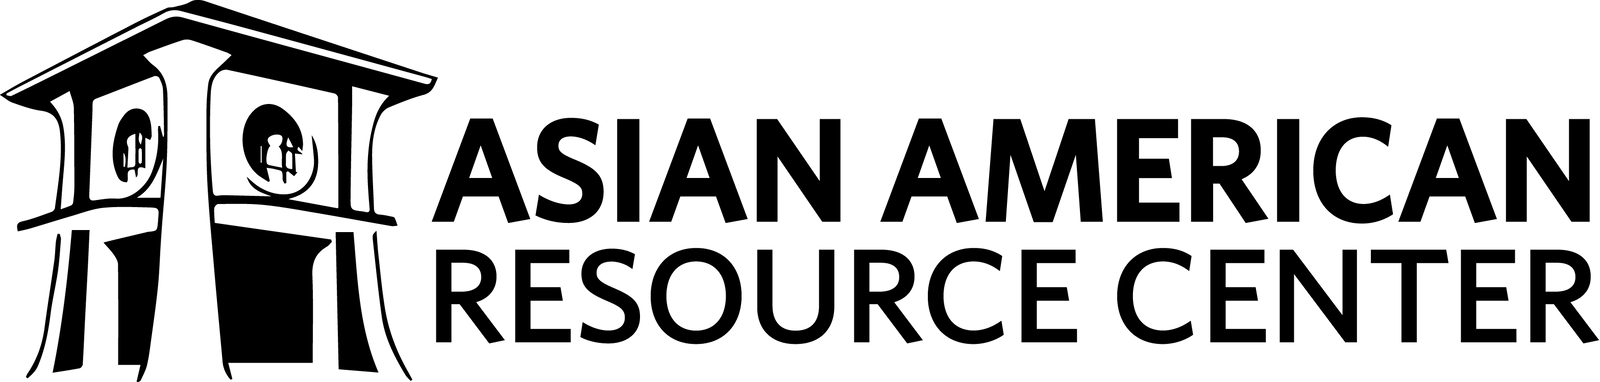 AARC Logo Black Transparent Horizontal.png